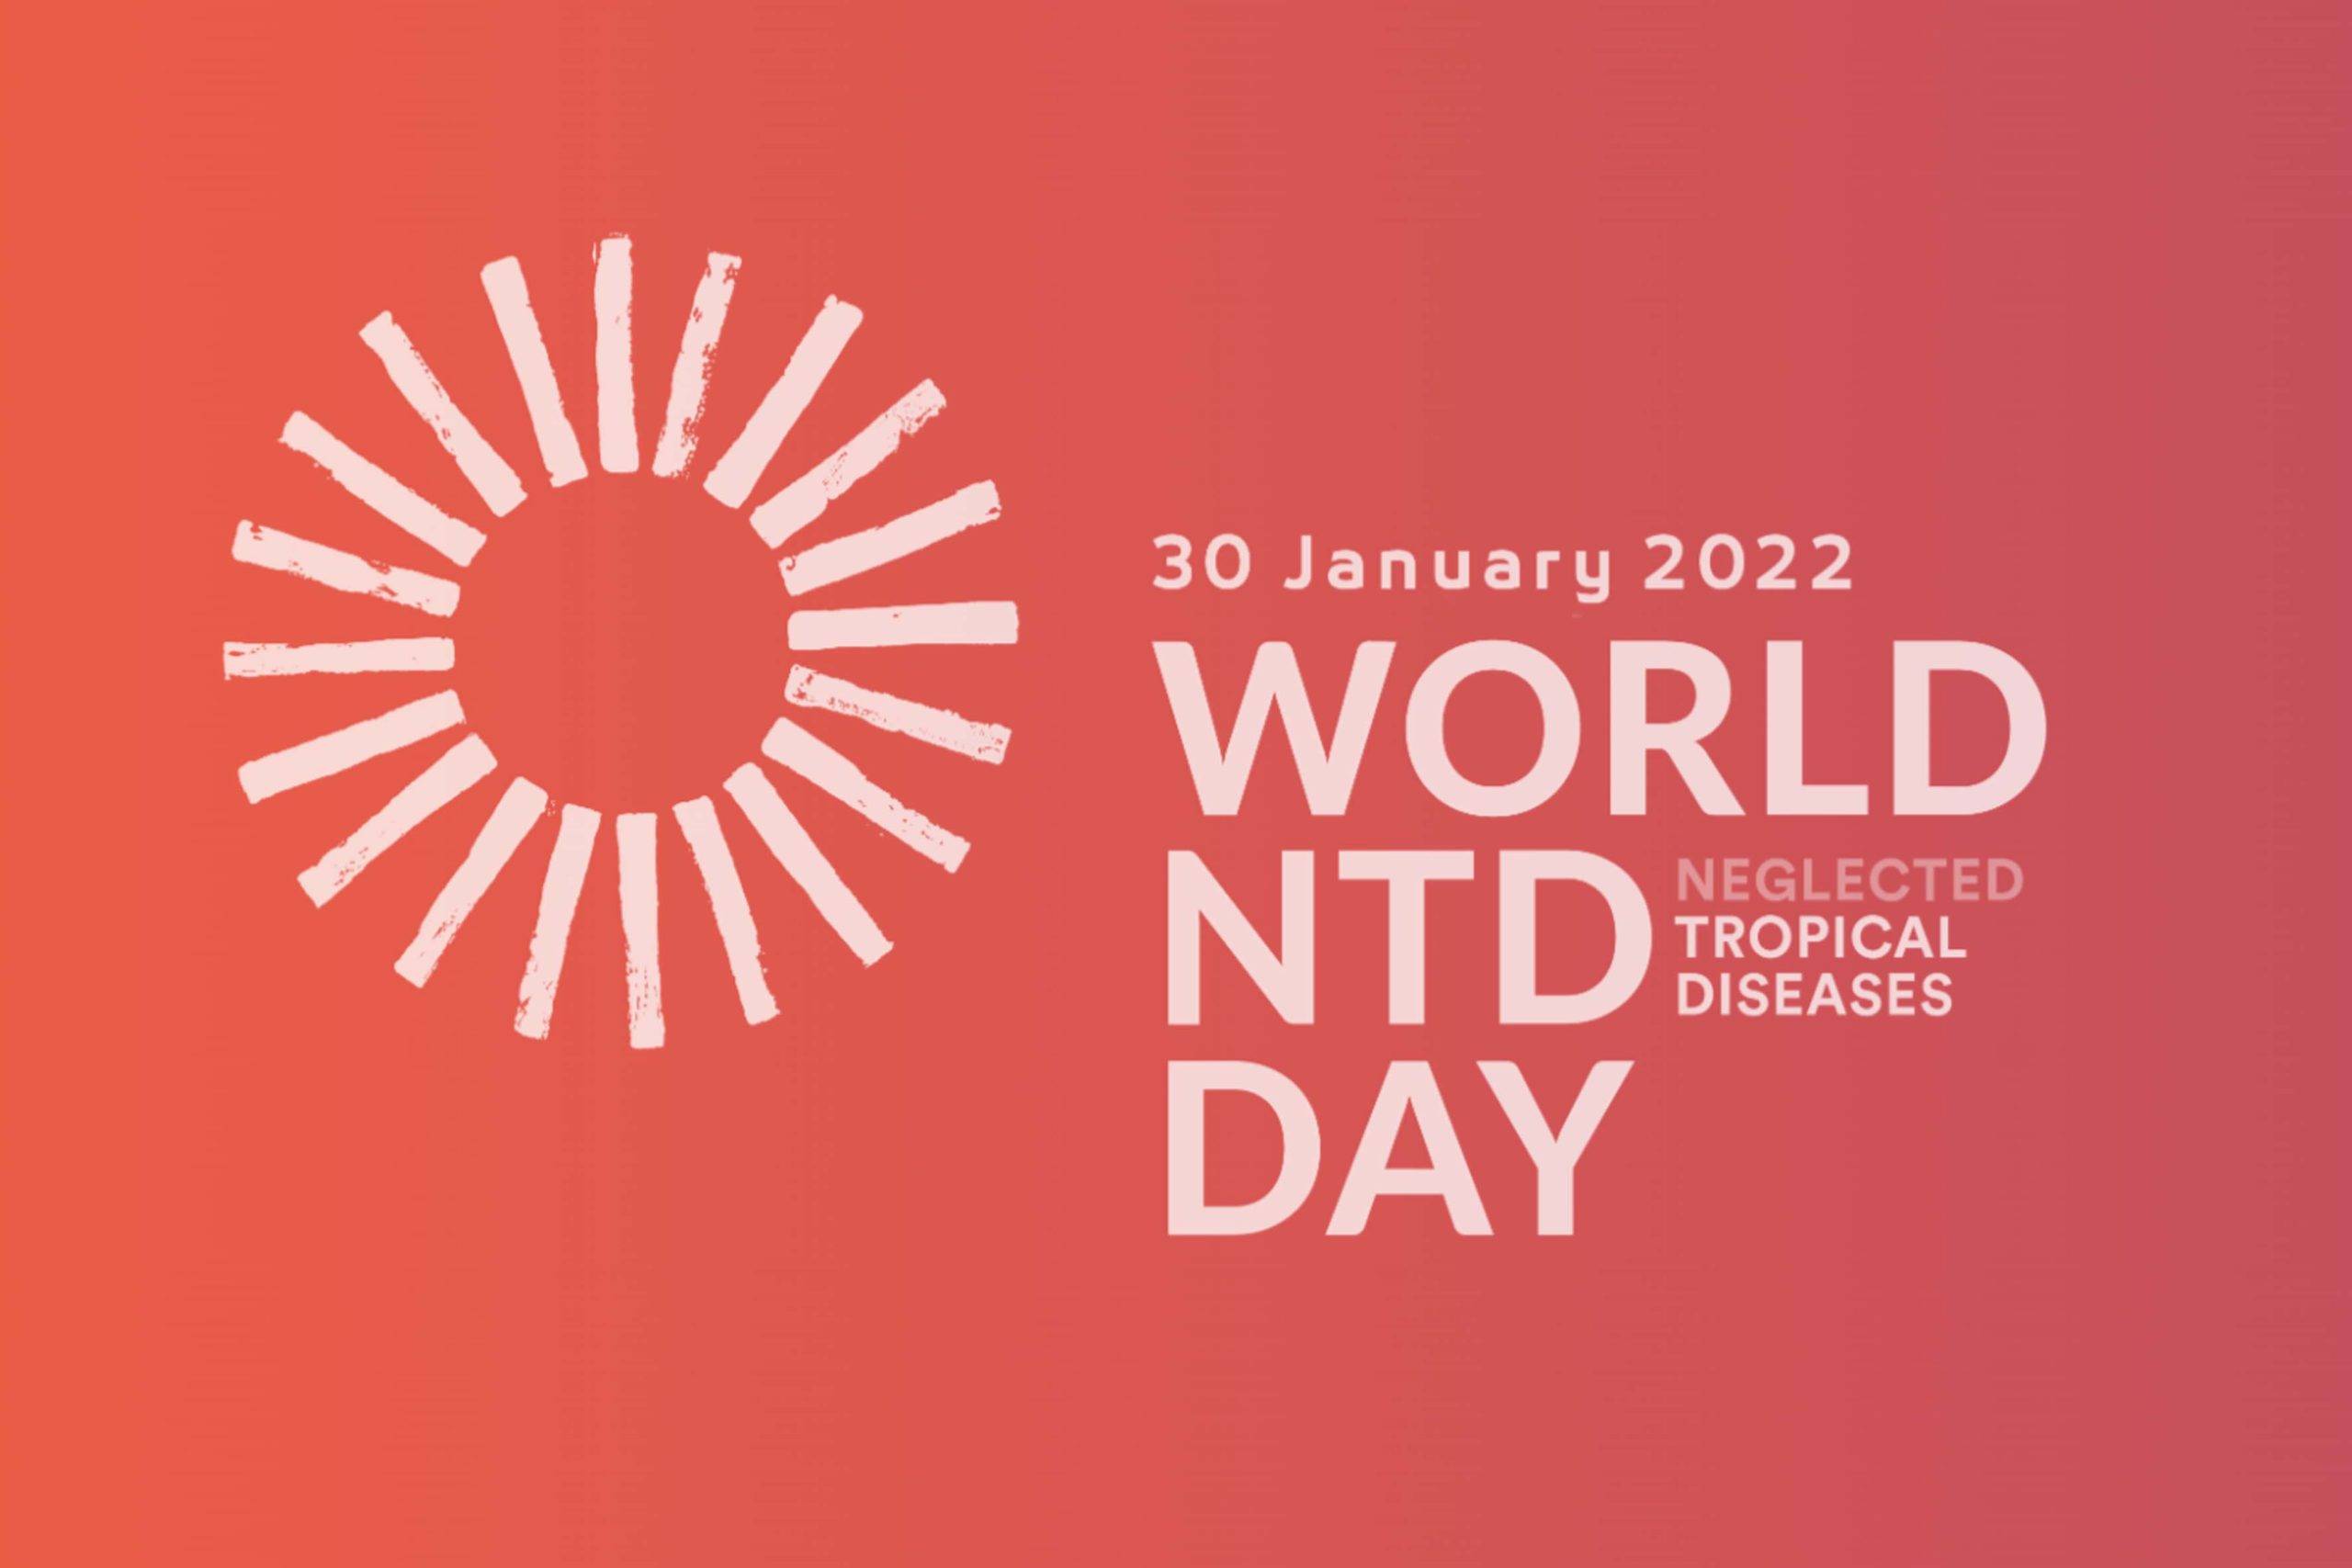 World NTD Day 2022